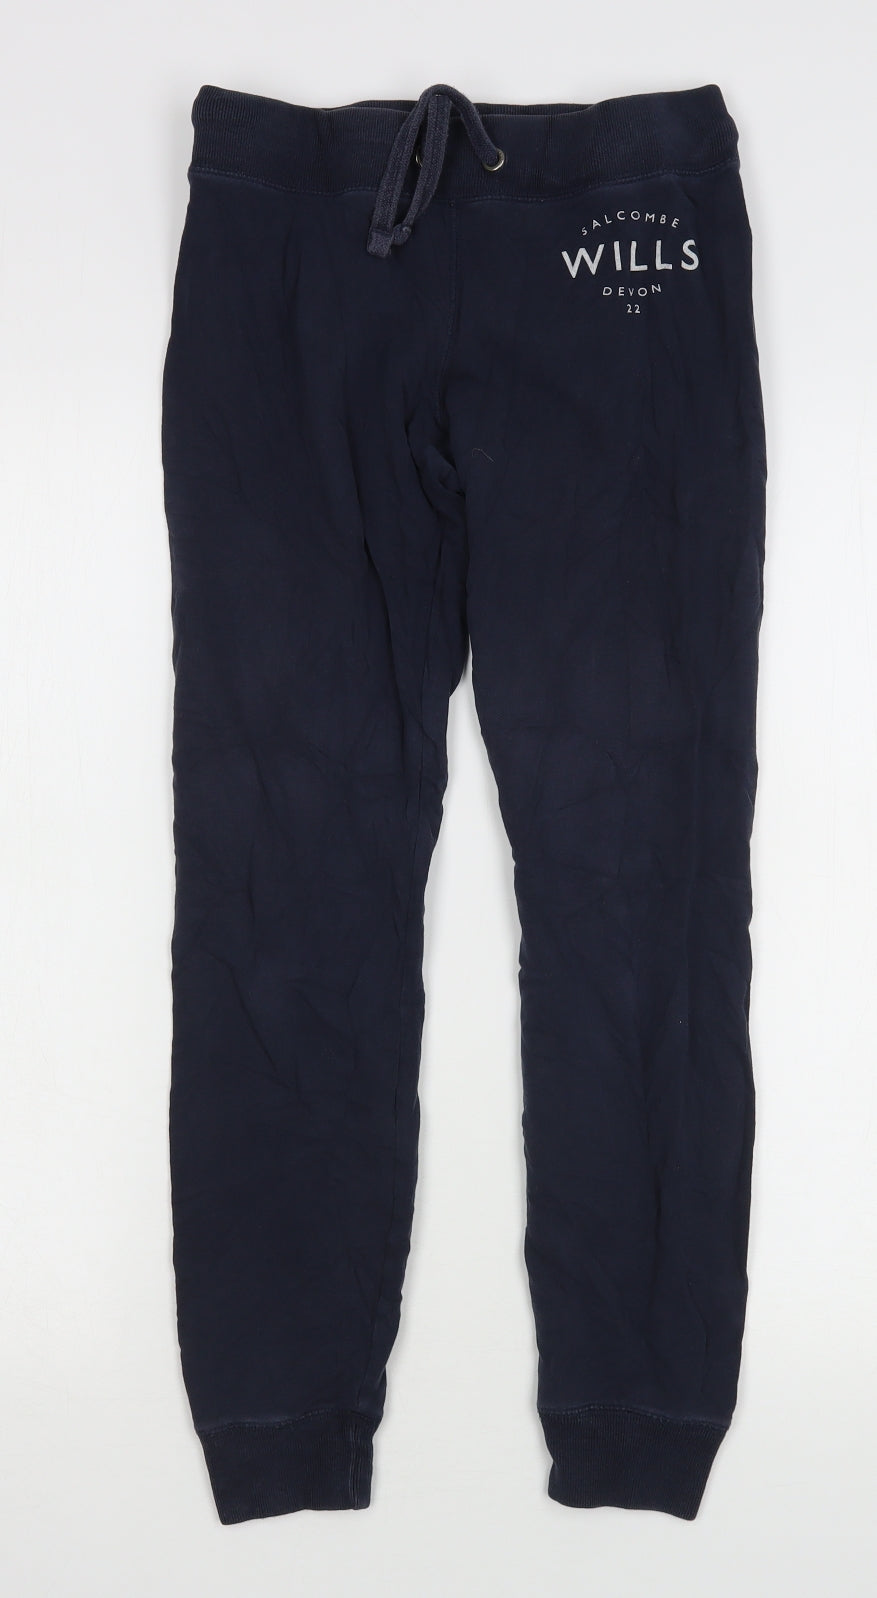 Jack Wills Womens Hunston Graphic Joggers Fleece Jogging Bottoms Trousers  Pants Black 4 XXXS  Amazoncouk Fashion